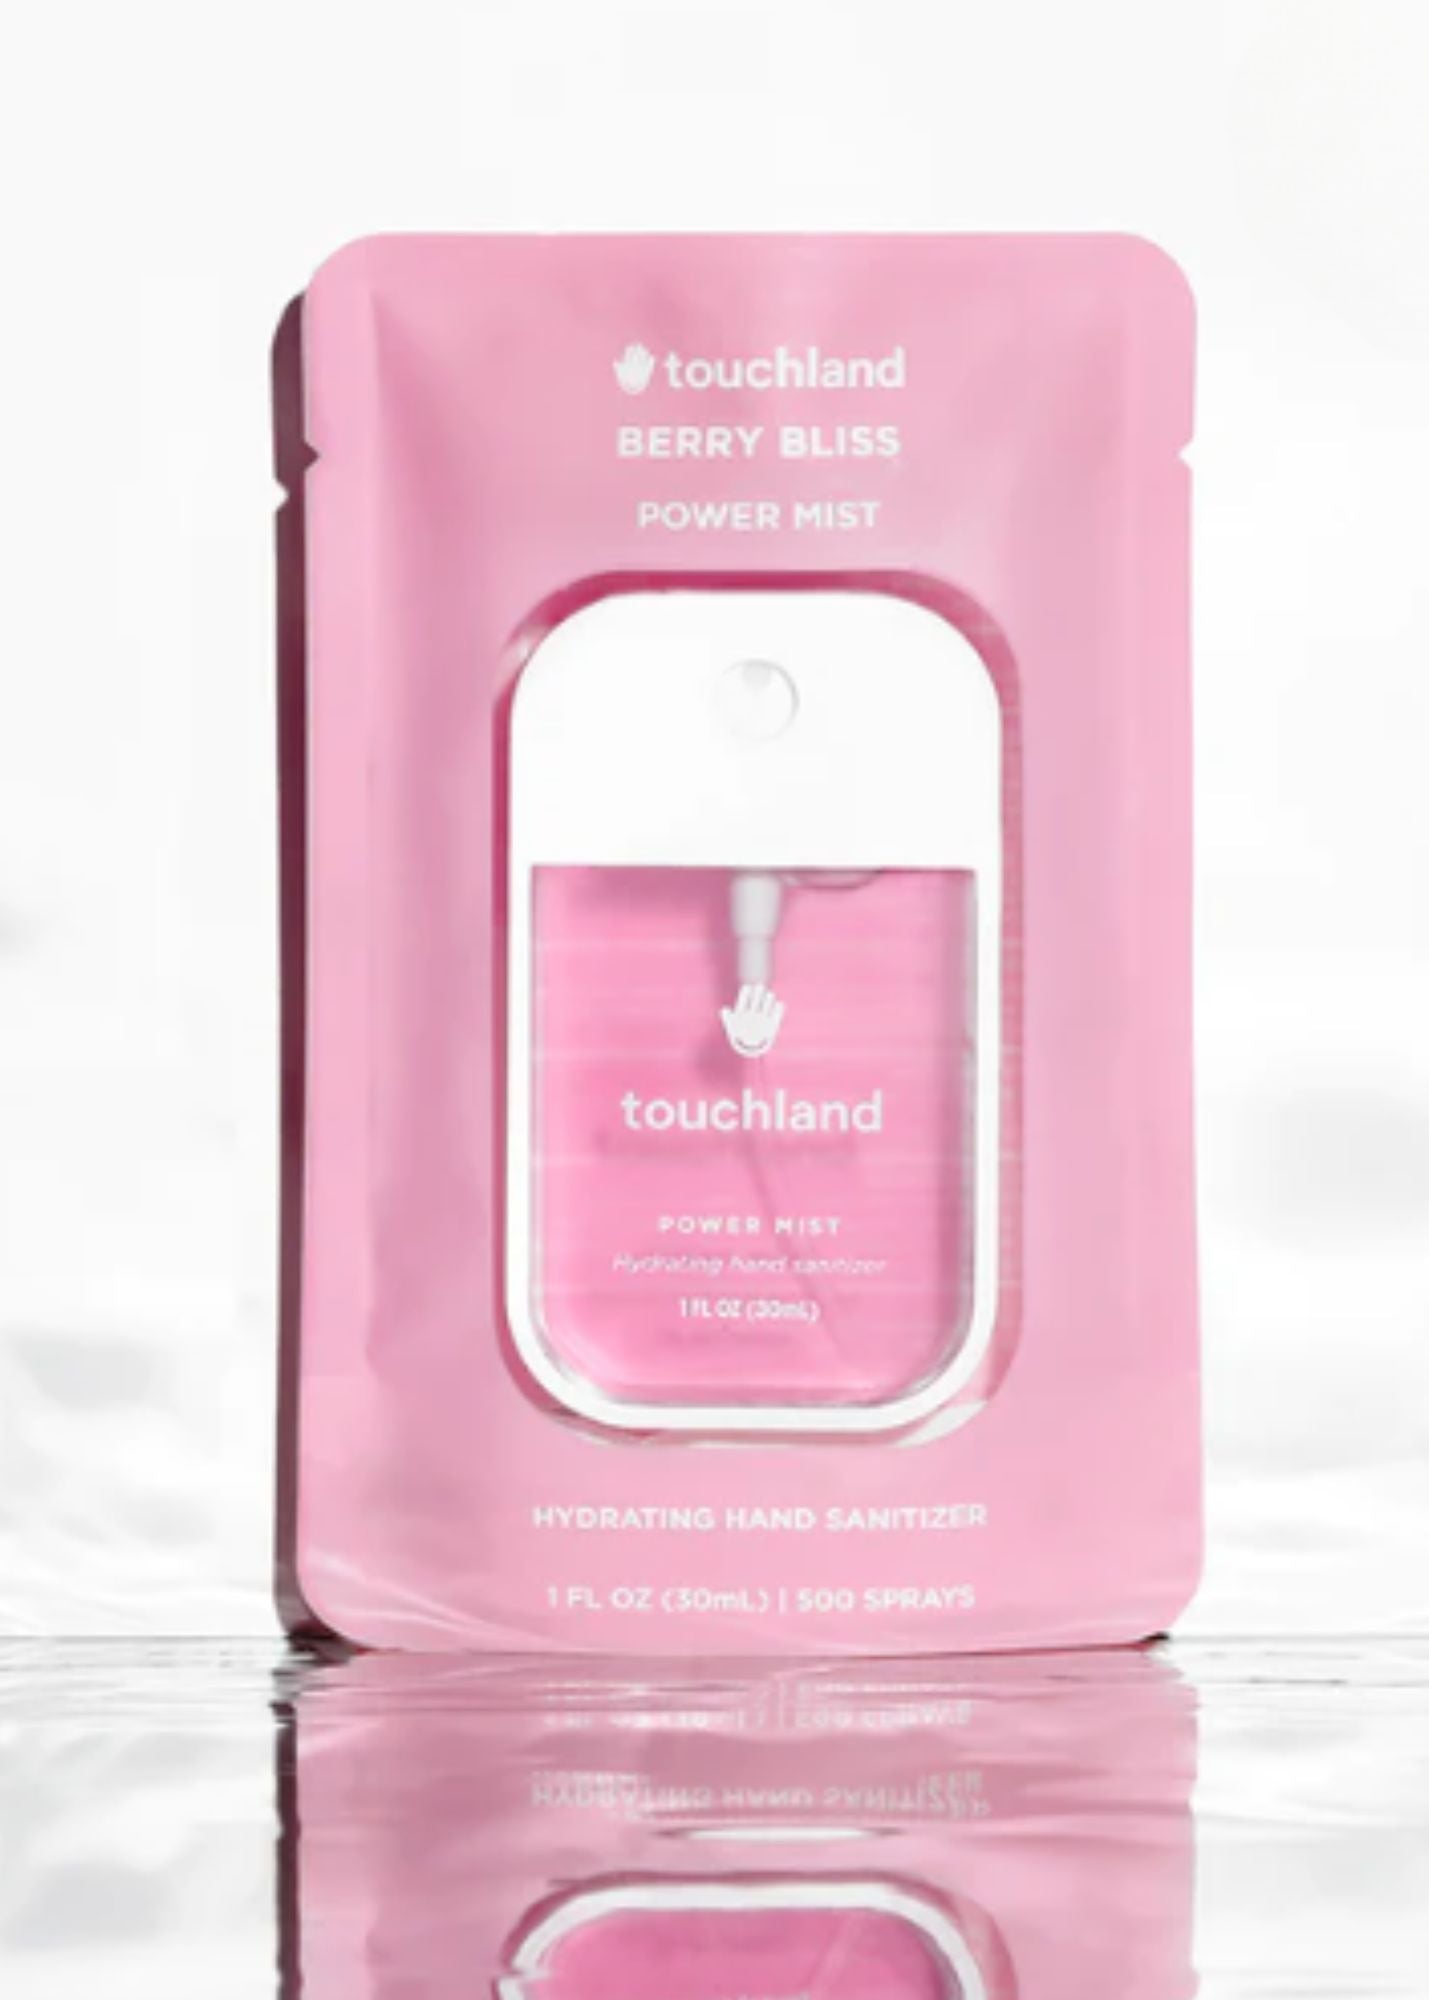 Touchland Power Mist Hand Sanitizer Gifts